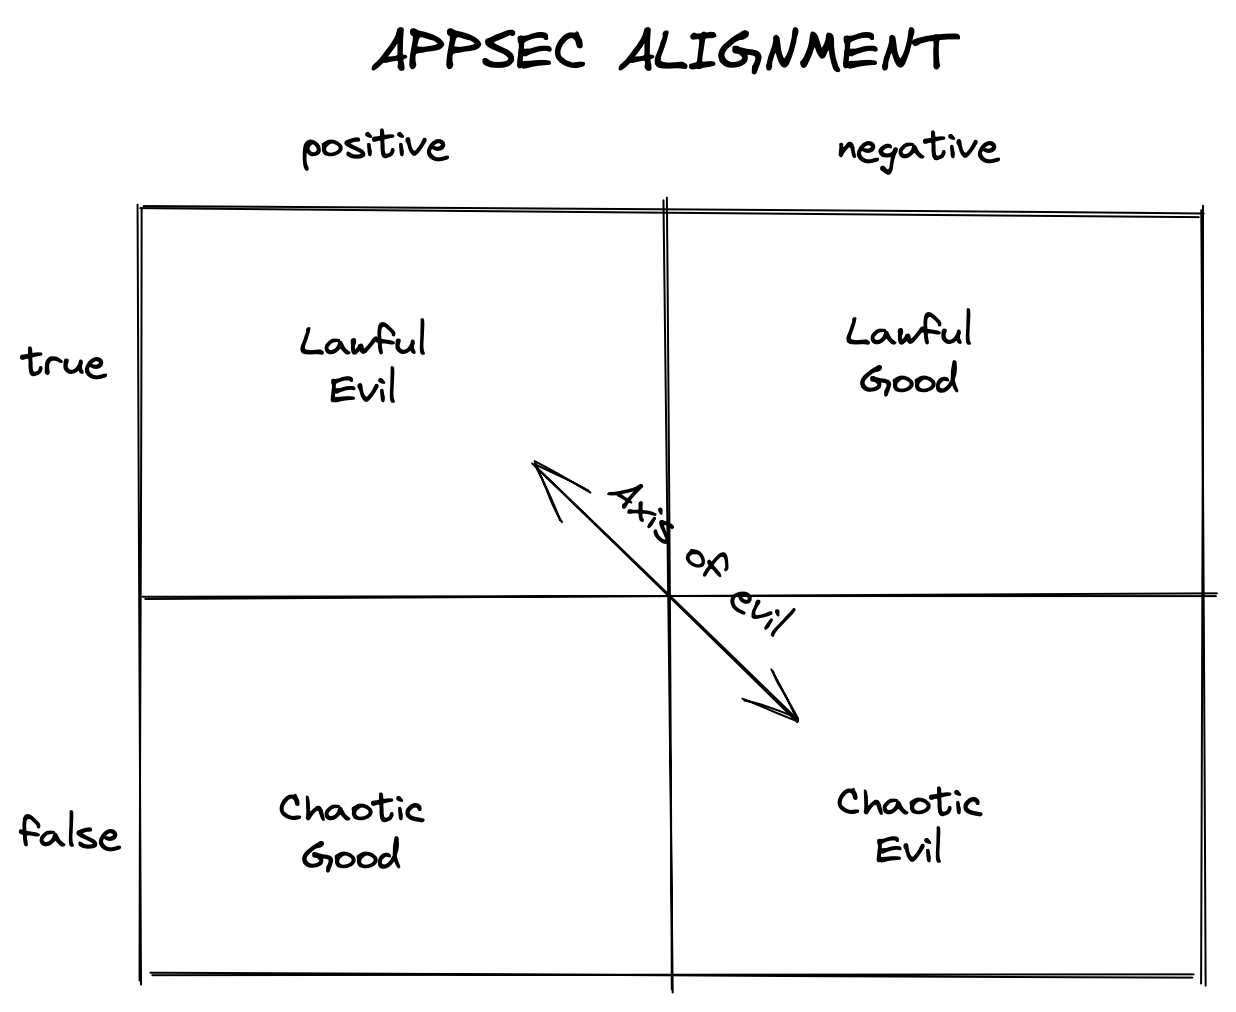 AppSec Alignment